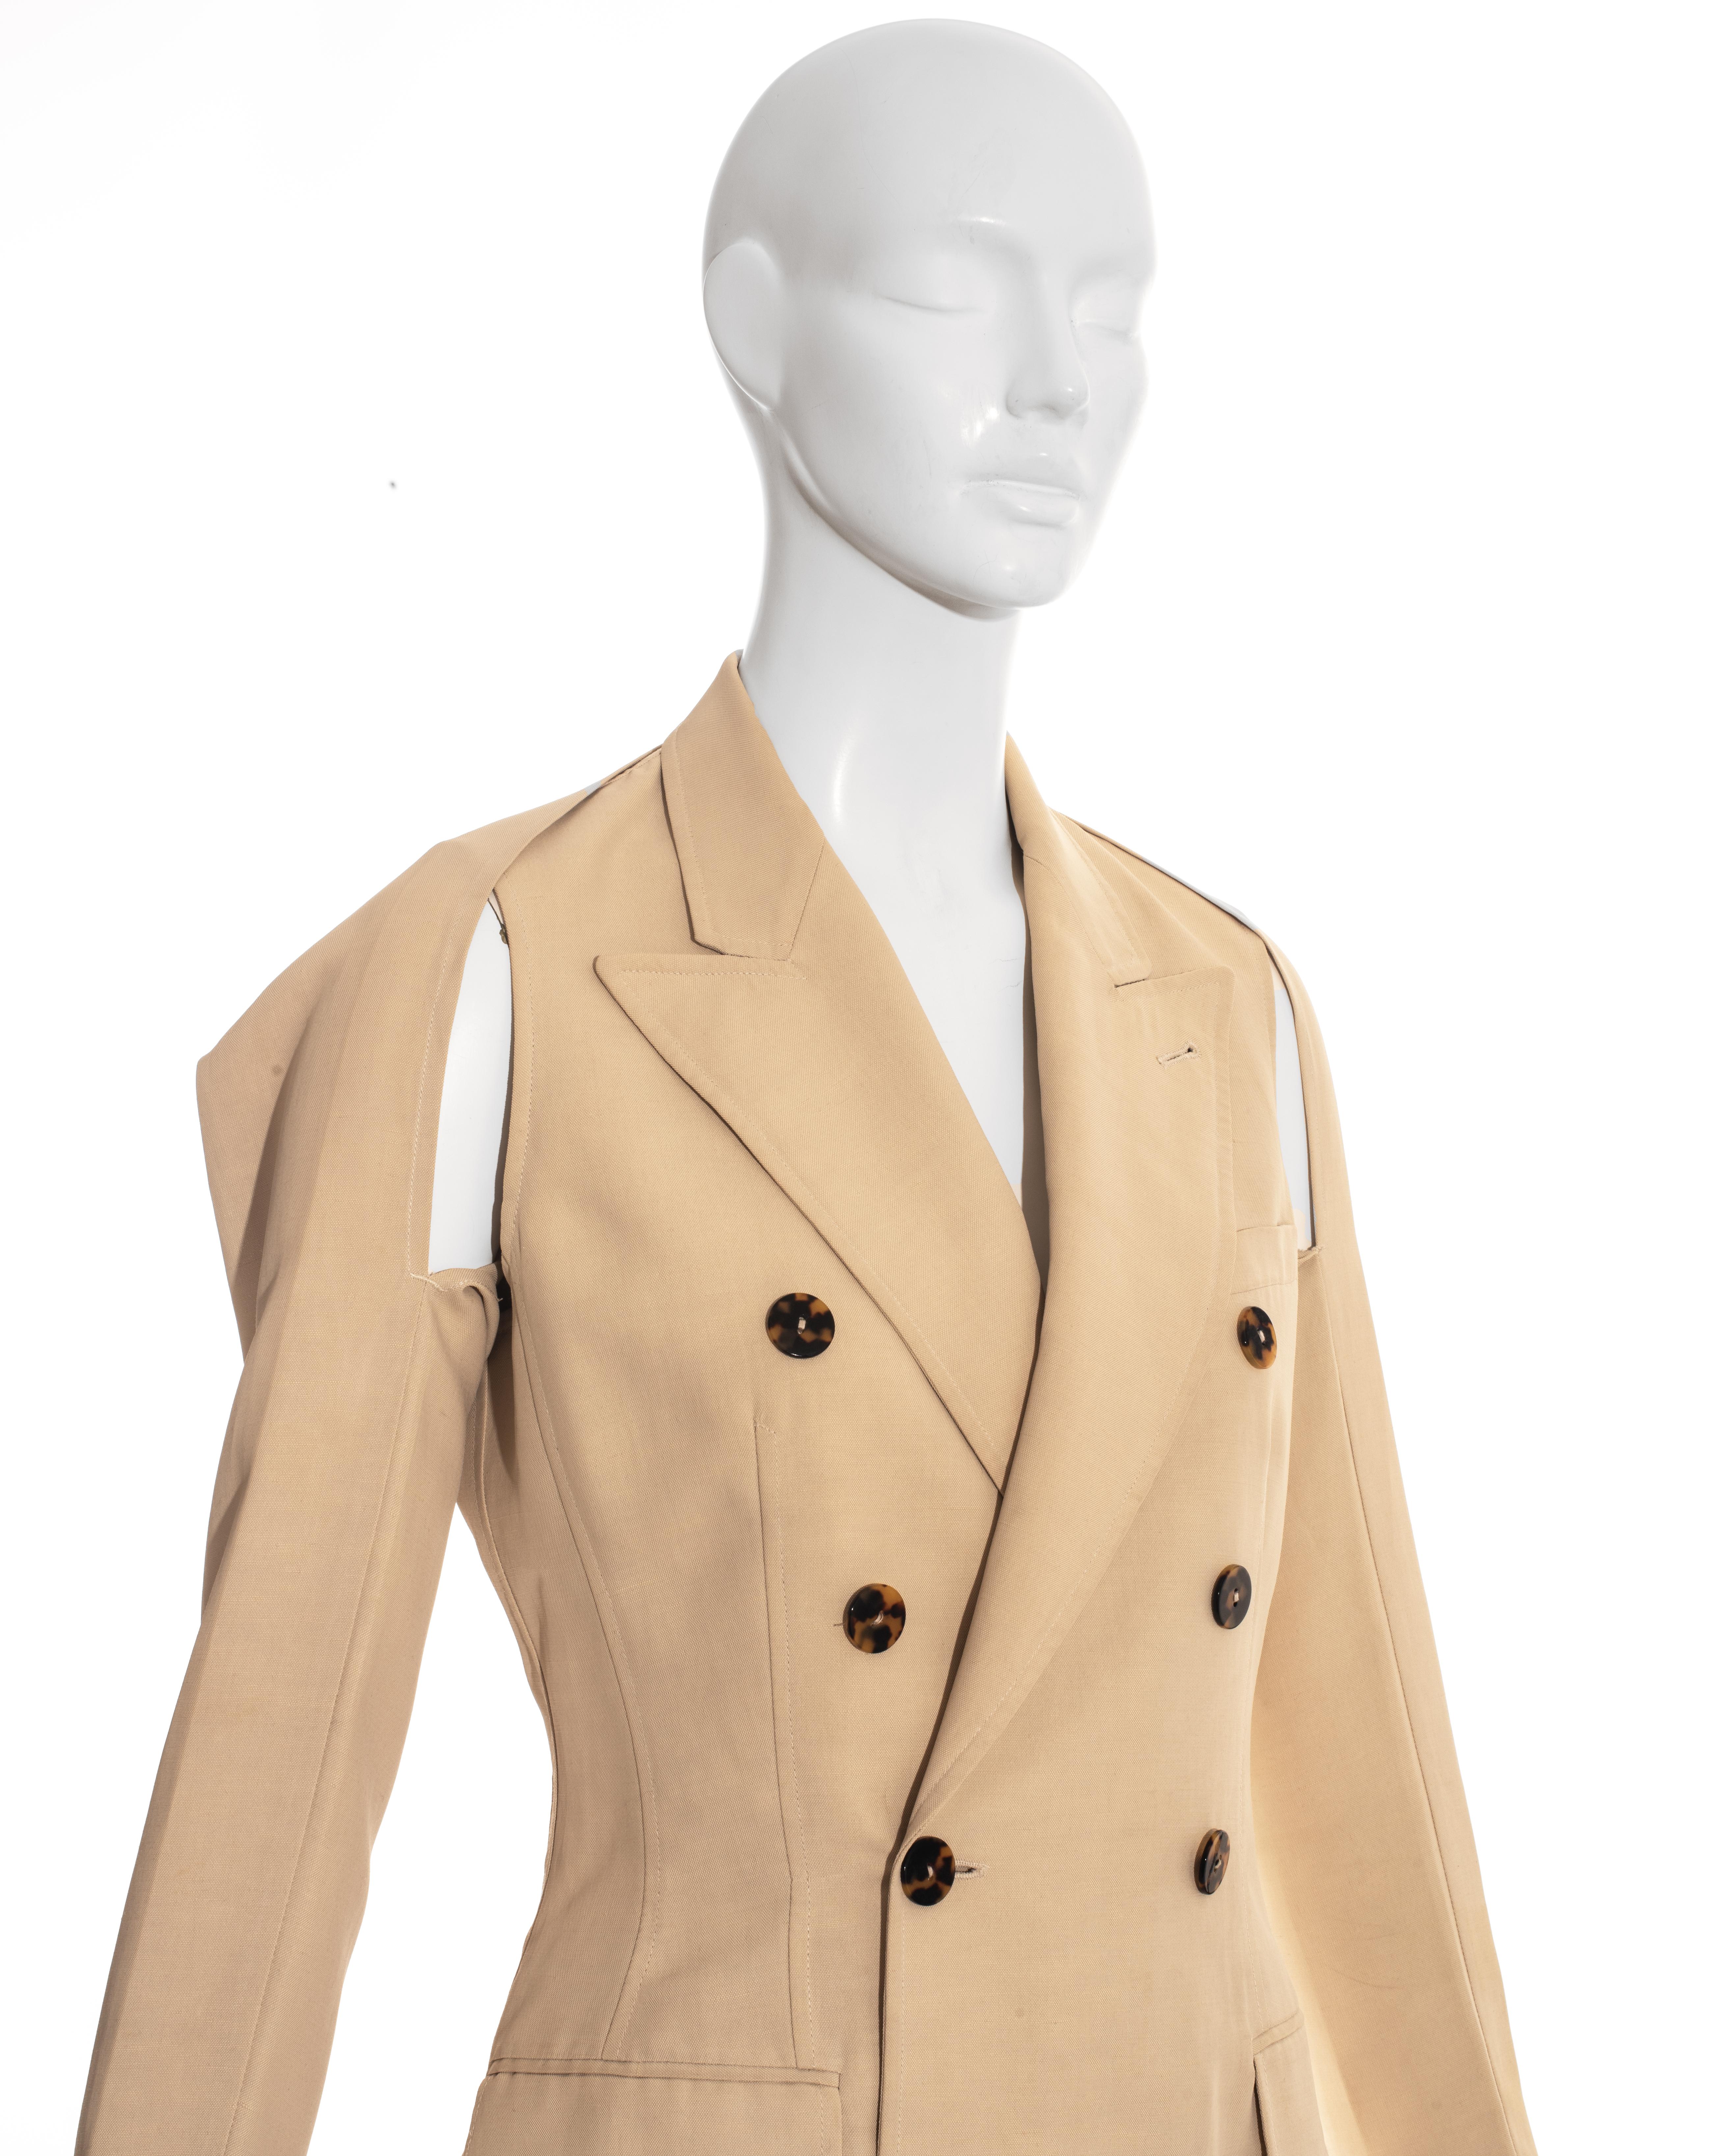 Jean Paul Gaultier Jean Paul Gaultier brown short sleeve double breasted trouser suit designer uk12 